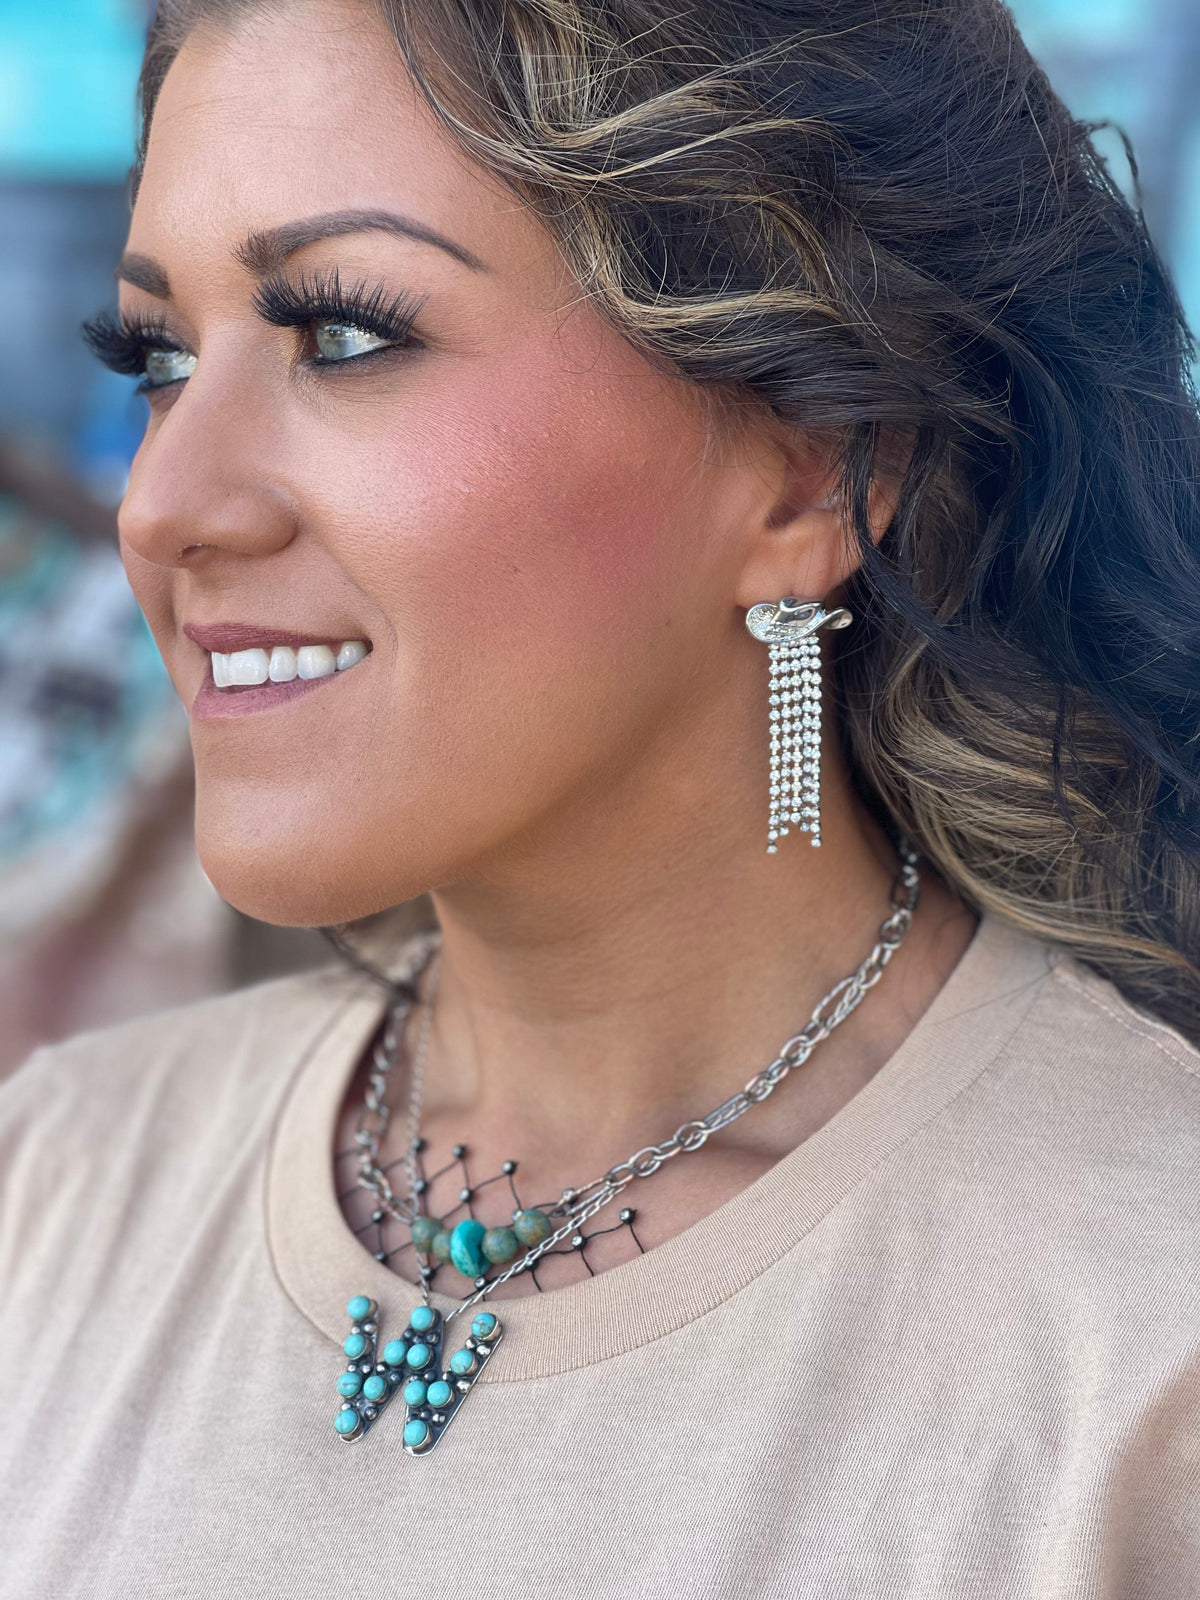 Necklace | Turquoise Semi- Precious Initial Pendant Necklace